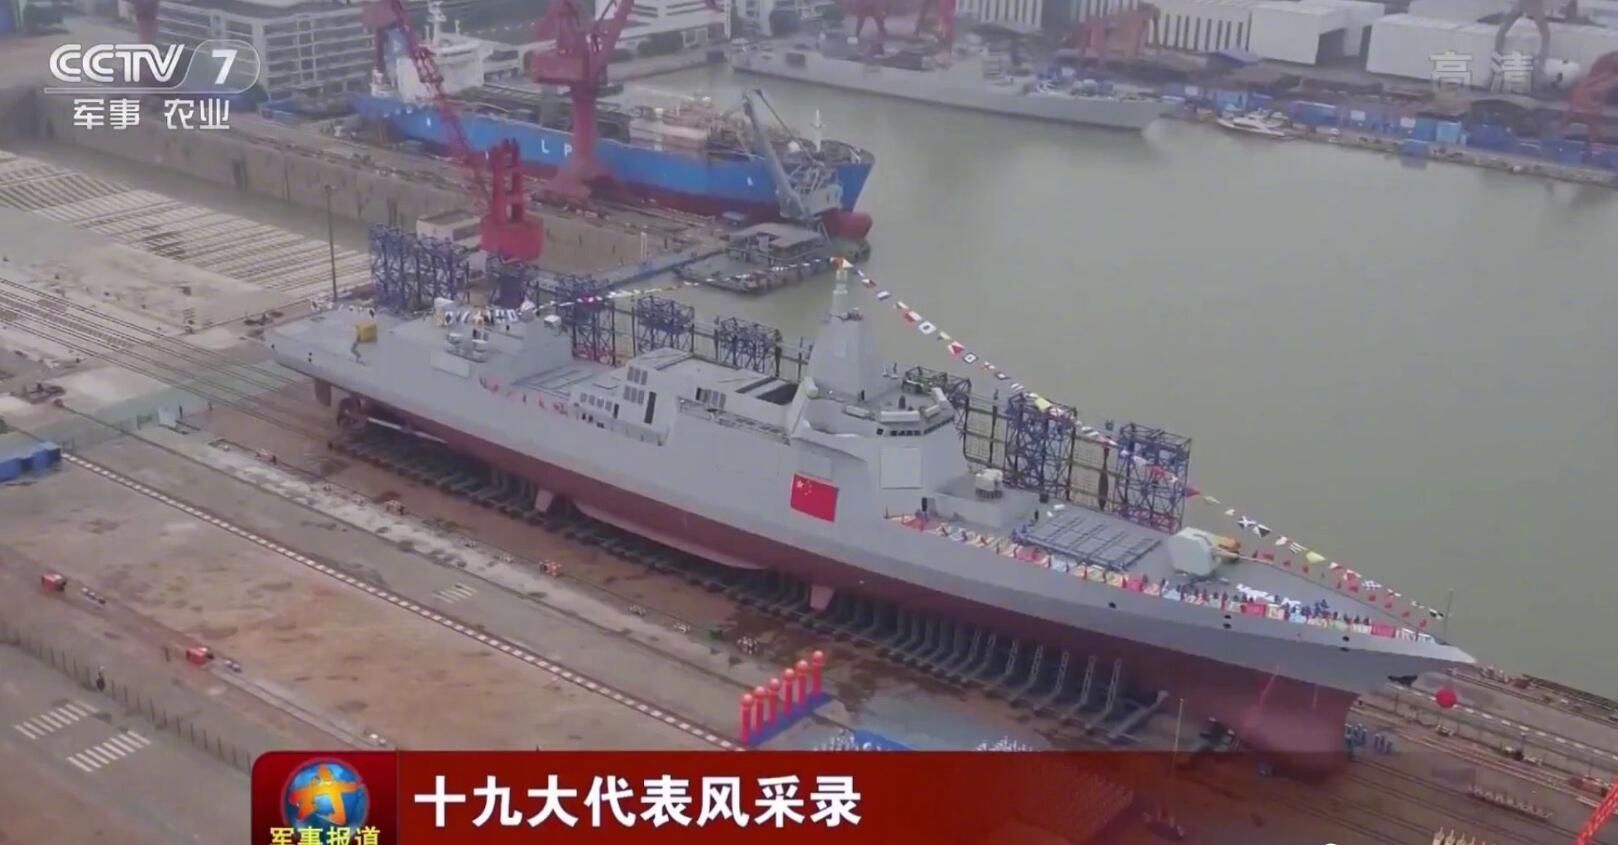 china's newest warship